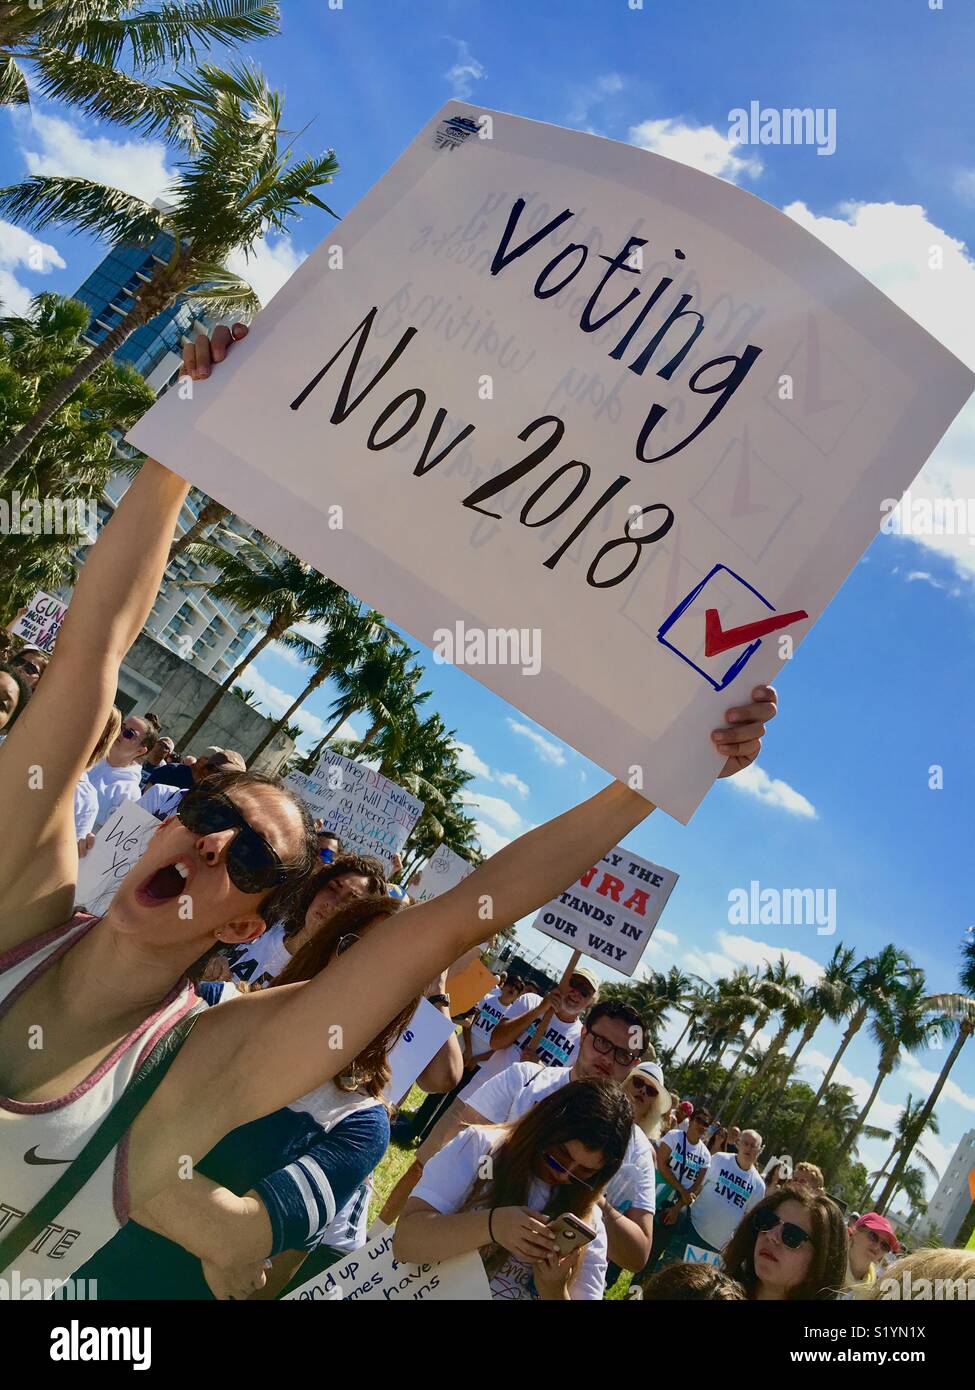 Miami Beach Florida" März für unser Leben." März 24, 2018 Protest nach Parkland, Florida School Shootings. Stockfoto